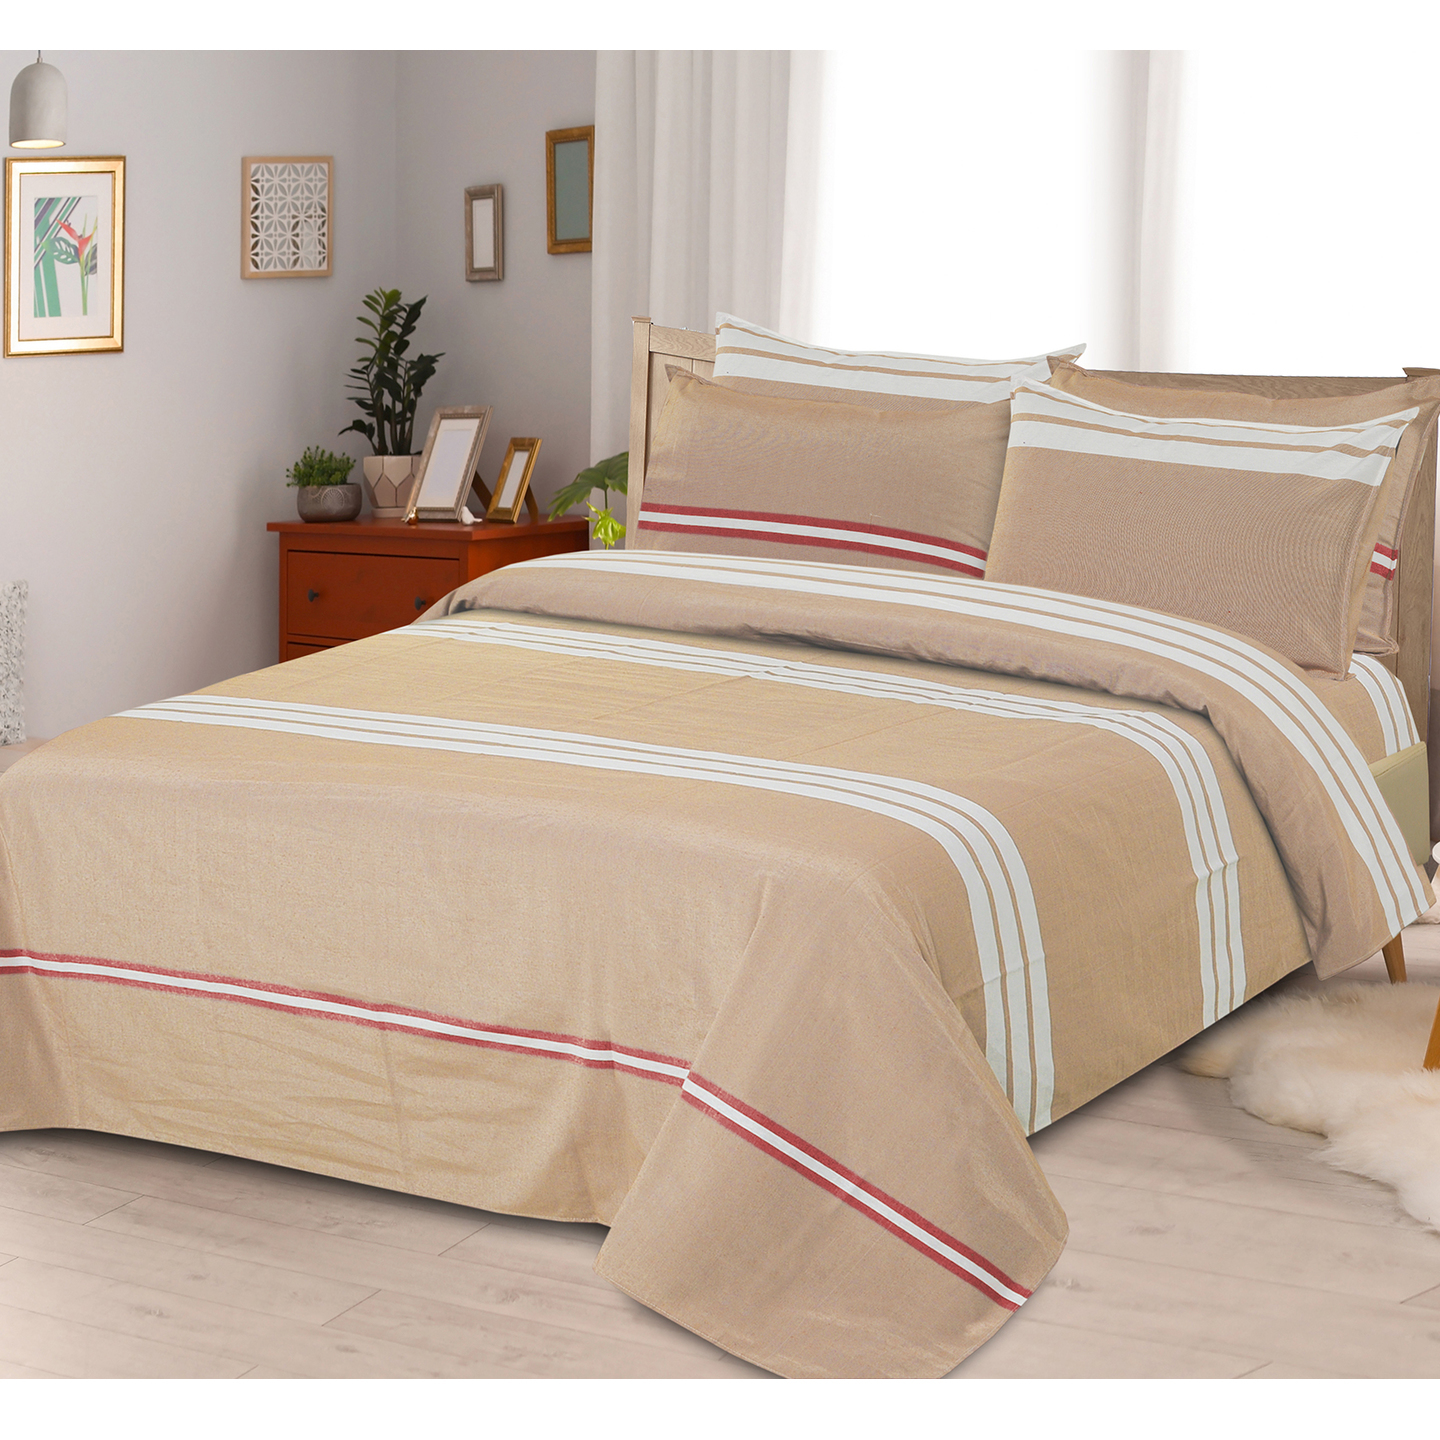 Handtex home cotton double bedsheet 90x100 inch Beige colour